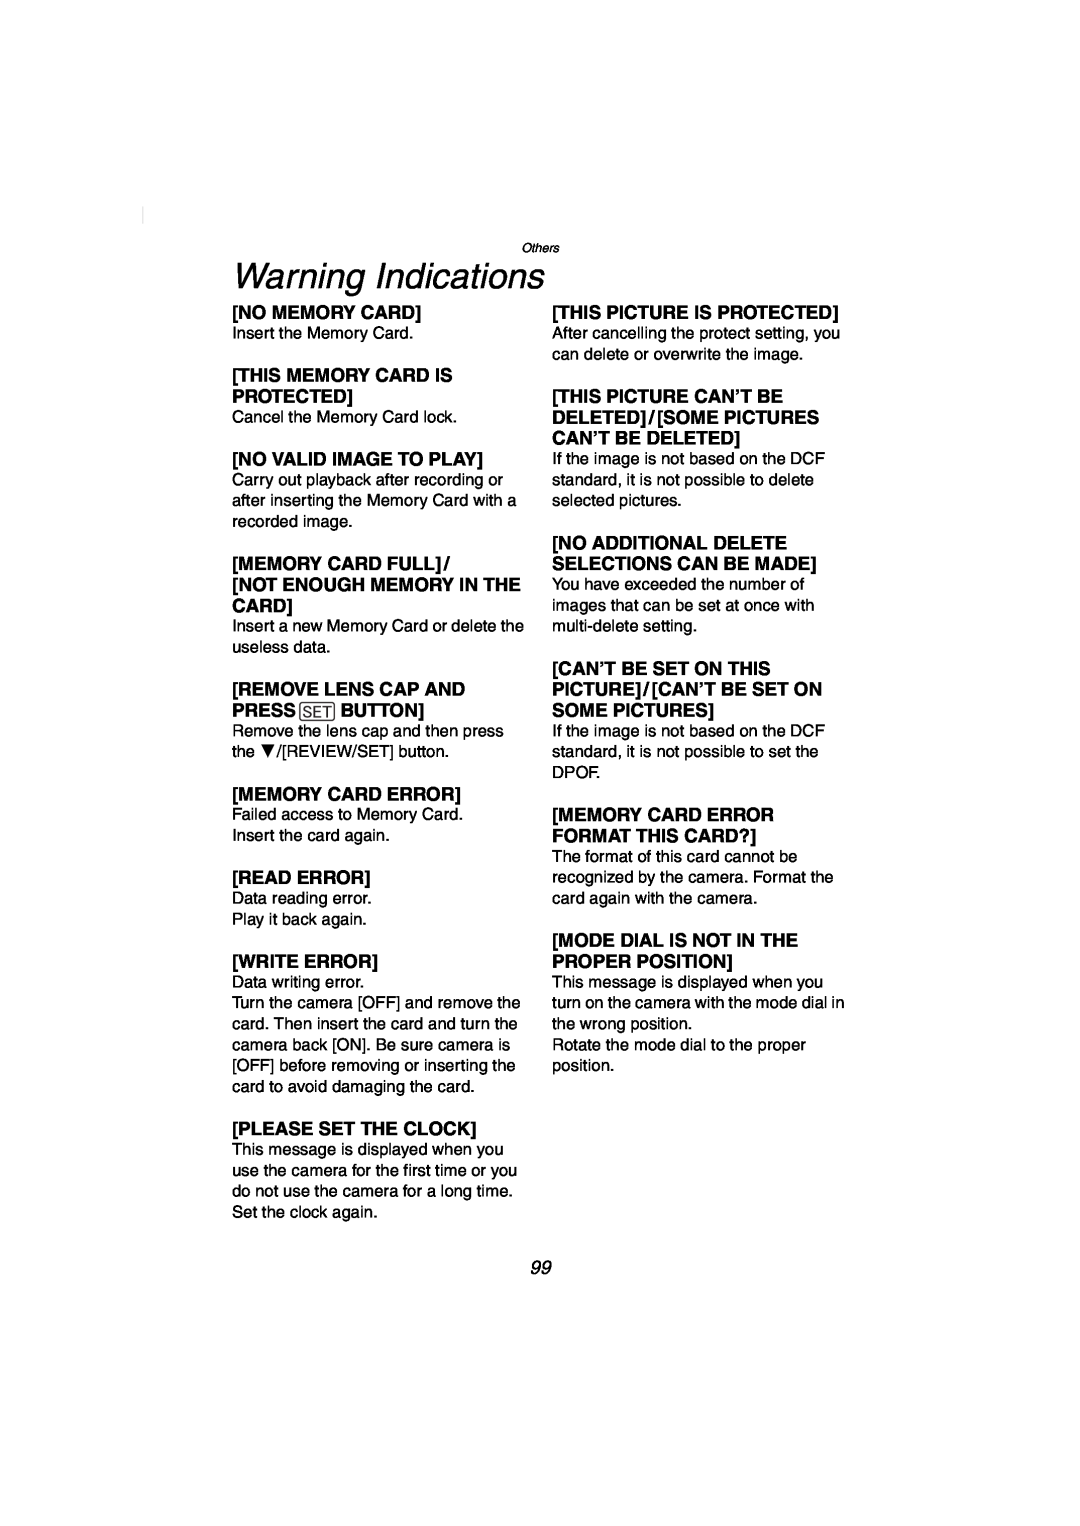 Panasonic DMC-FZ2PP operating instructions Warning Indications 